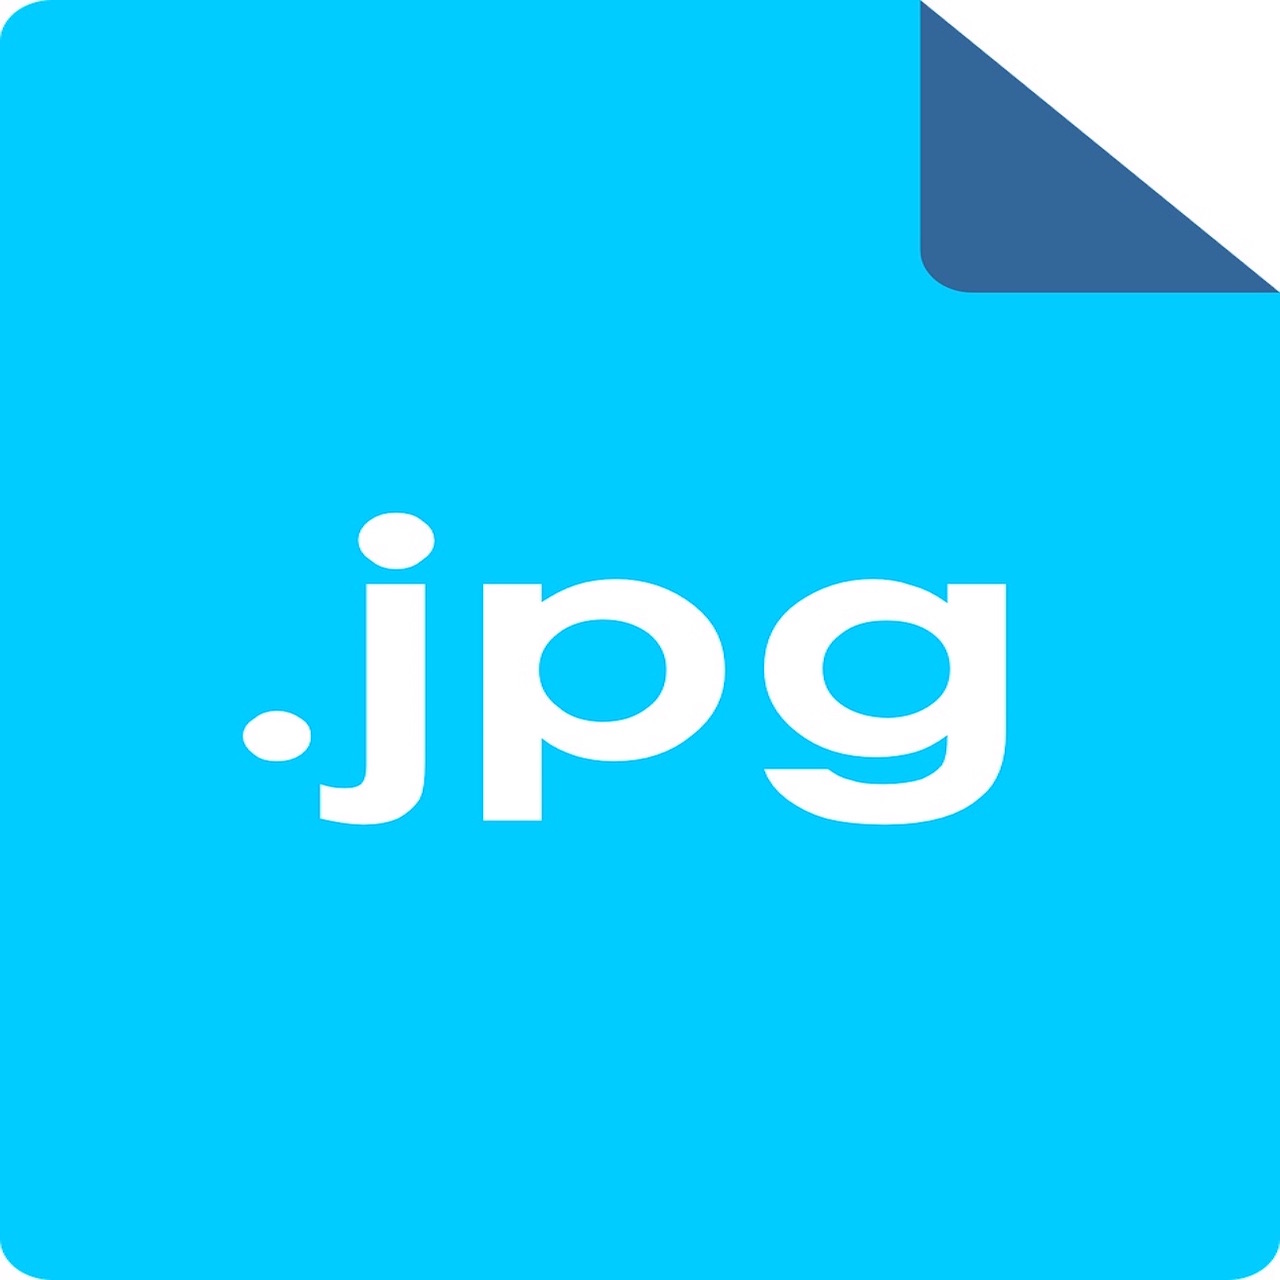 【Mac】スクリーンショットの保存形式をPNGからJPGに変更する方法